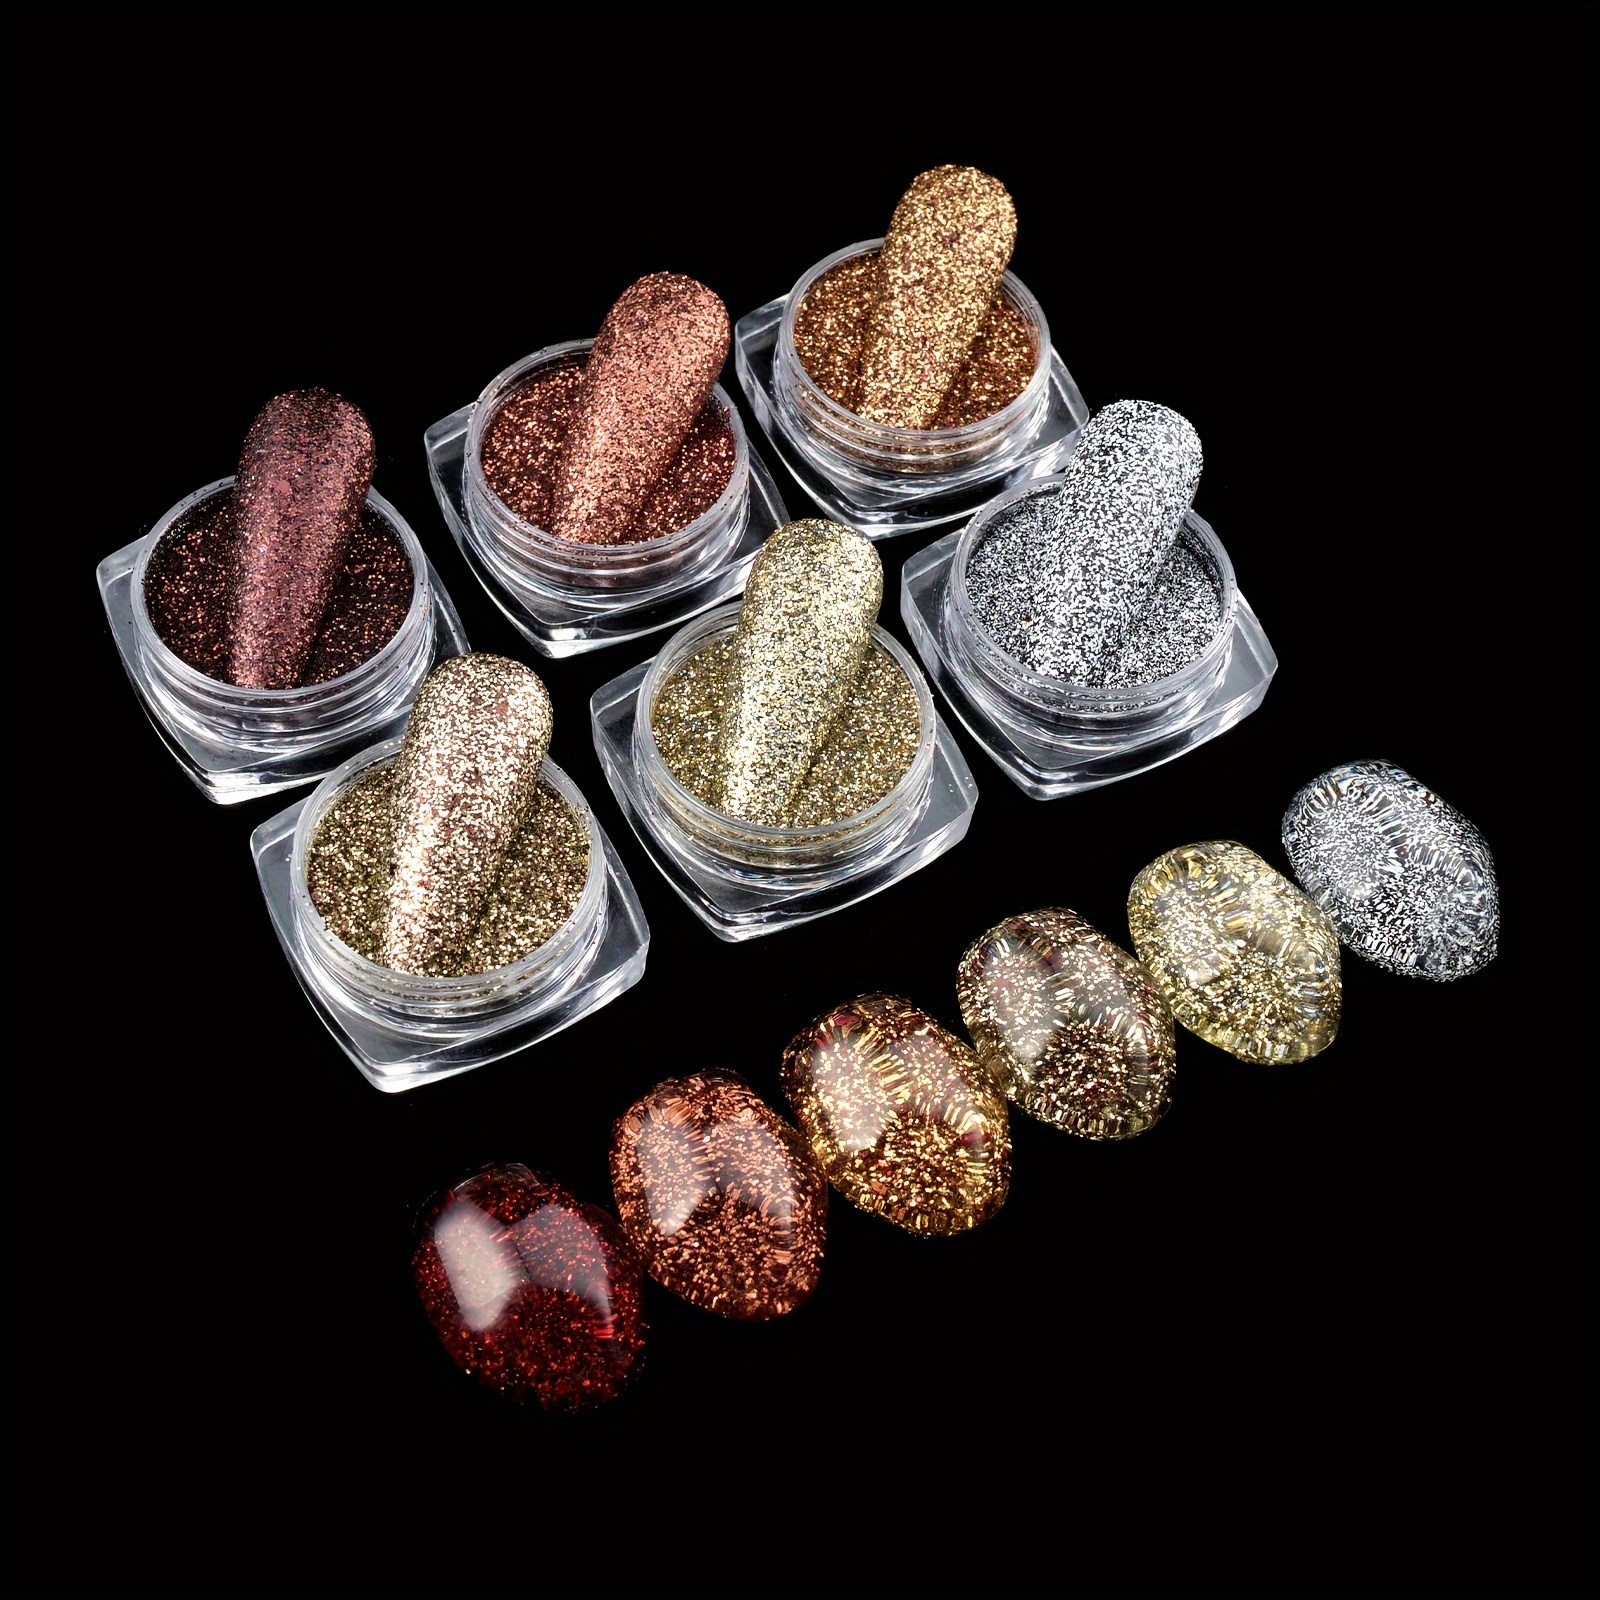 Hsmqhjwe Holographic Glitter Powder Diamond Bengdi Colors Shattered Powder Powder 6 Art Diamond Nail Christmas Jewels for Crafts, Size: As Description